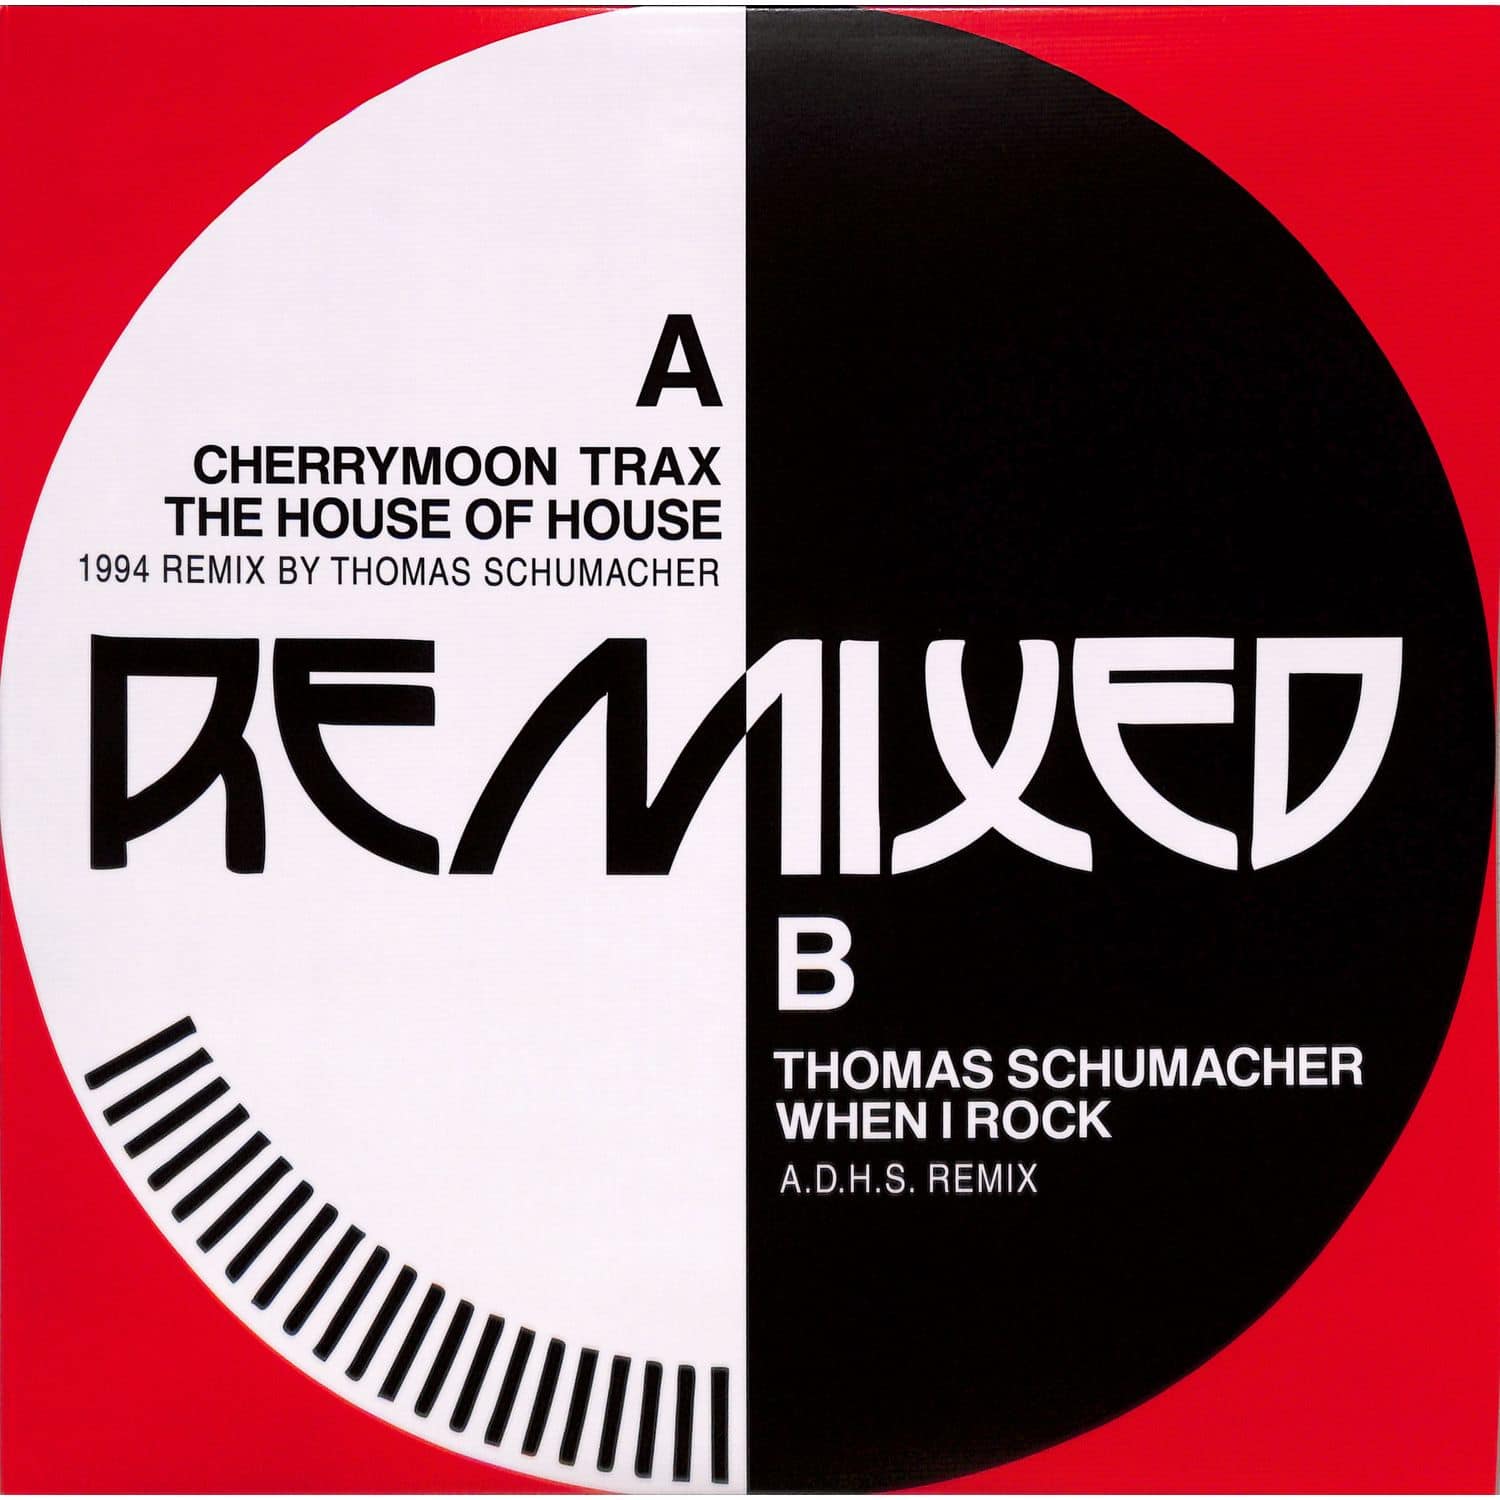 Cherrymoon Trax / Thomas Schumacher - THE HOUSE OF HOUSE / WHEN I ROCK REMIXES